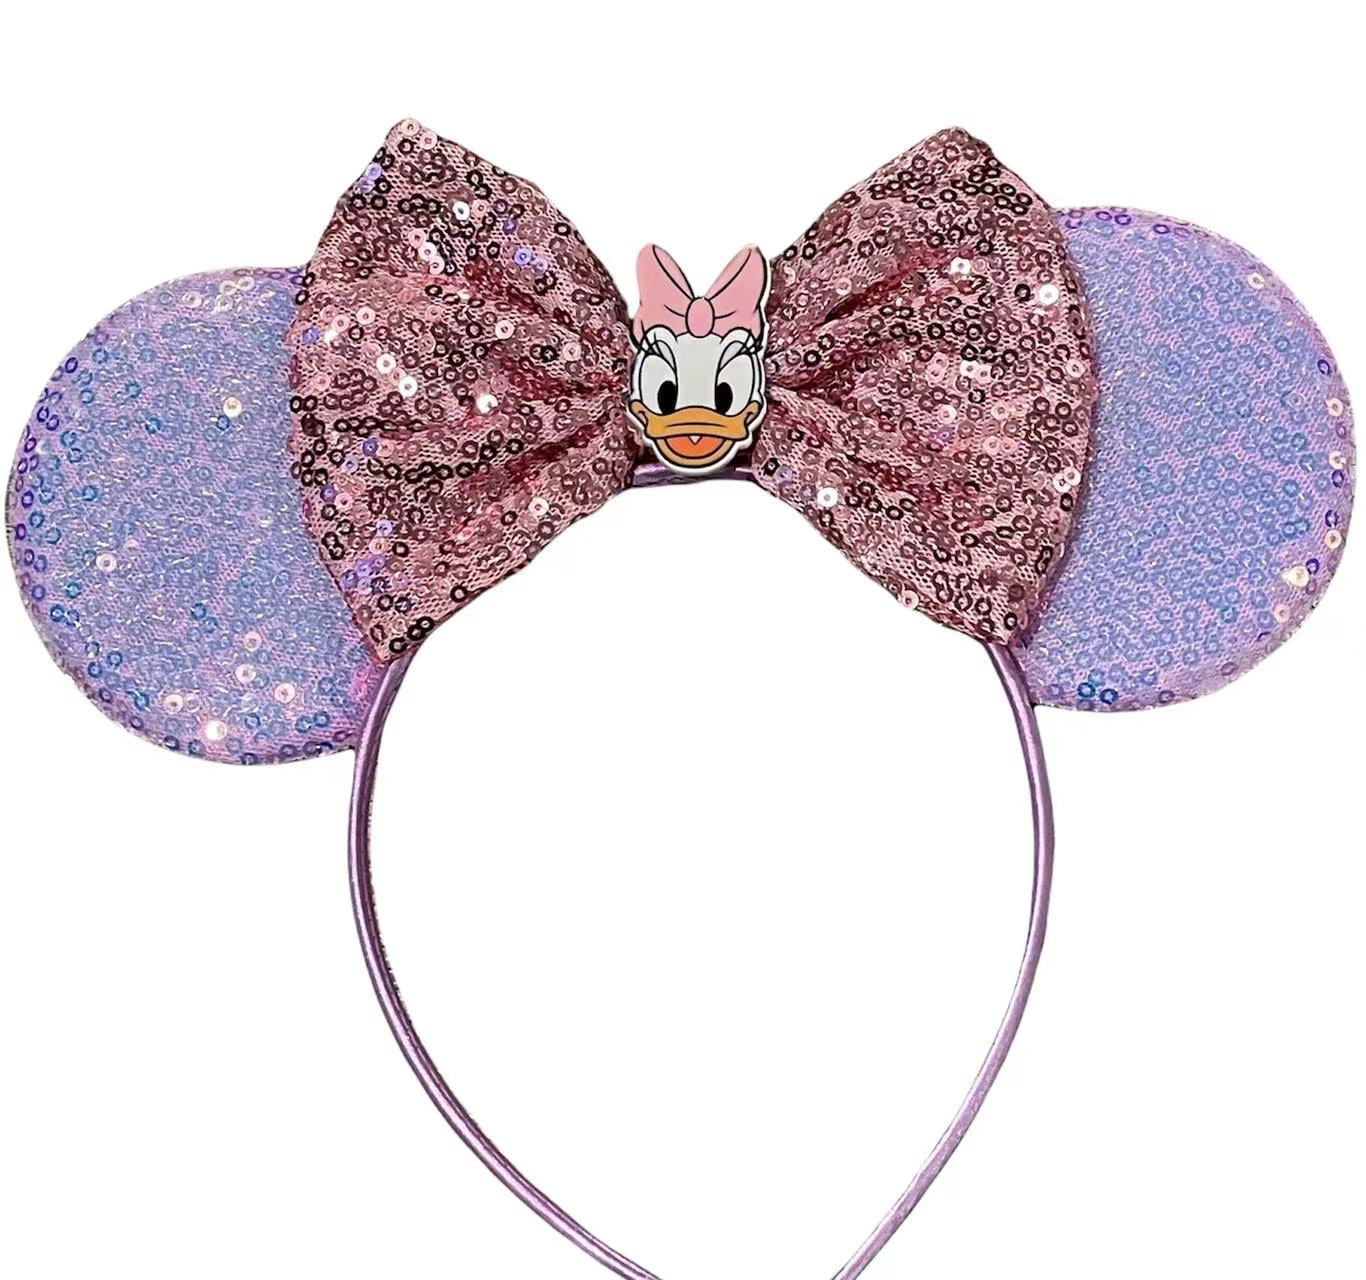 Details about   Disney Parks Minnie Ears Aulani Hawaii Black Gold Plumeria Limited Headband 